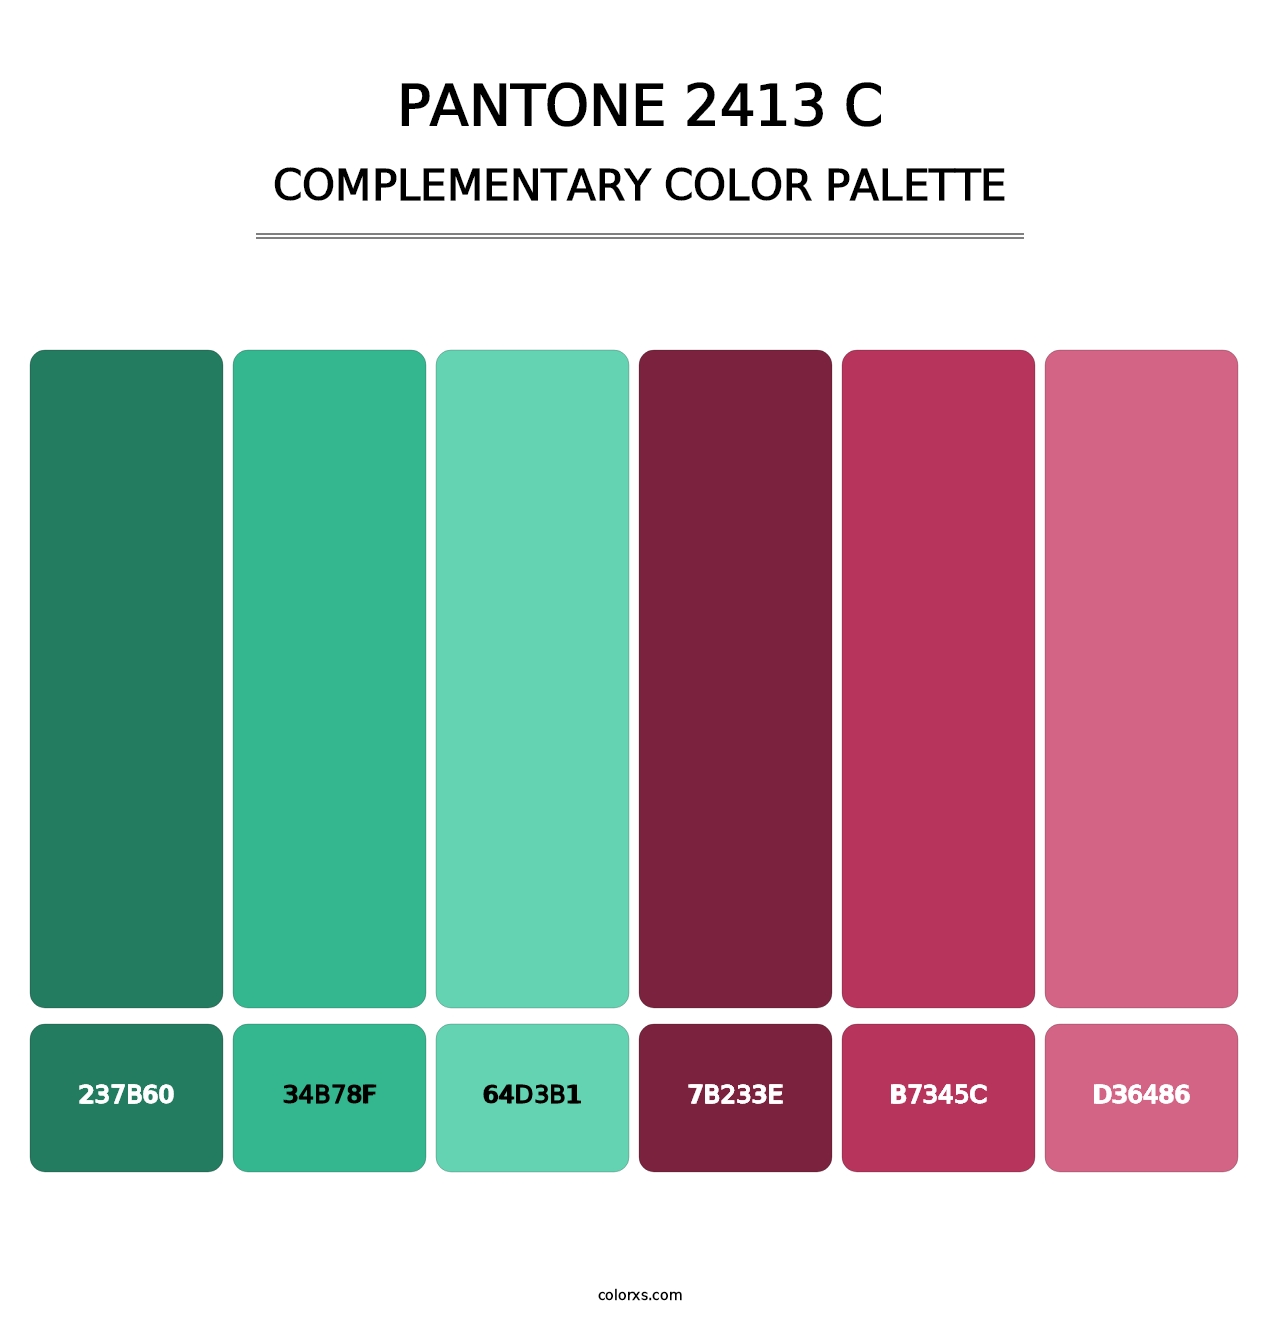 PANTONE 2413 C - Complementary Color Palette